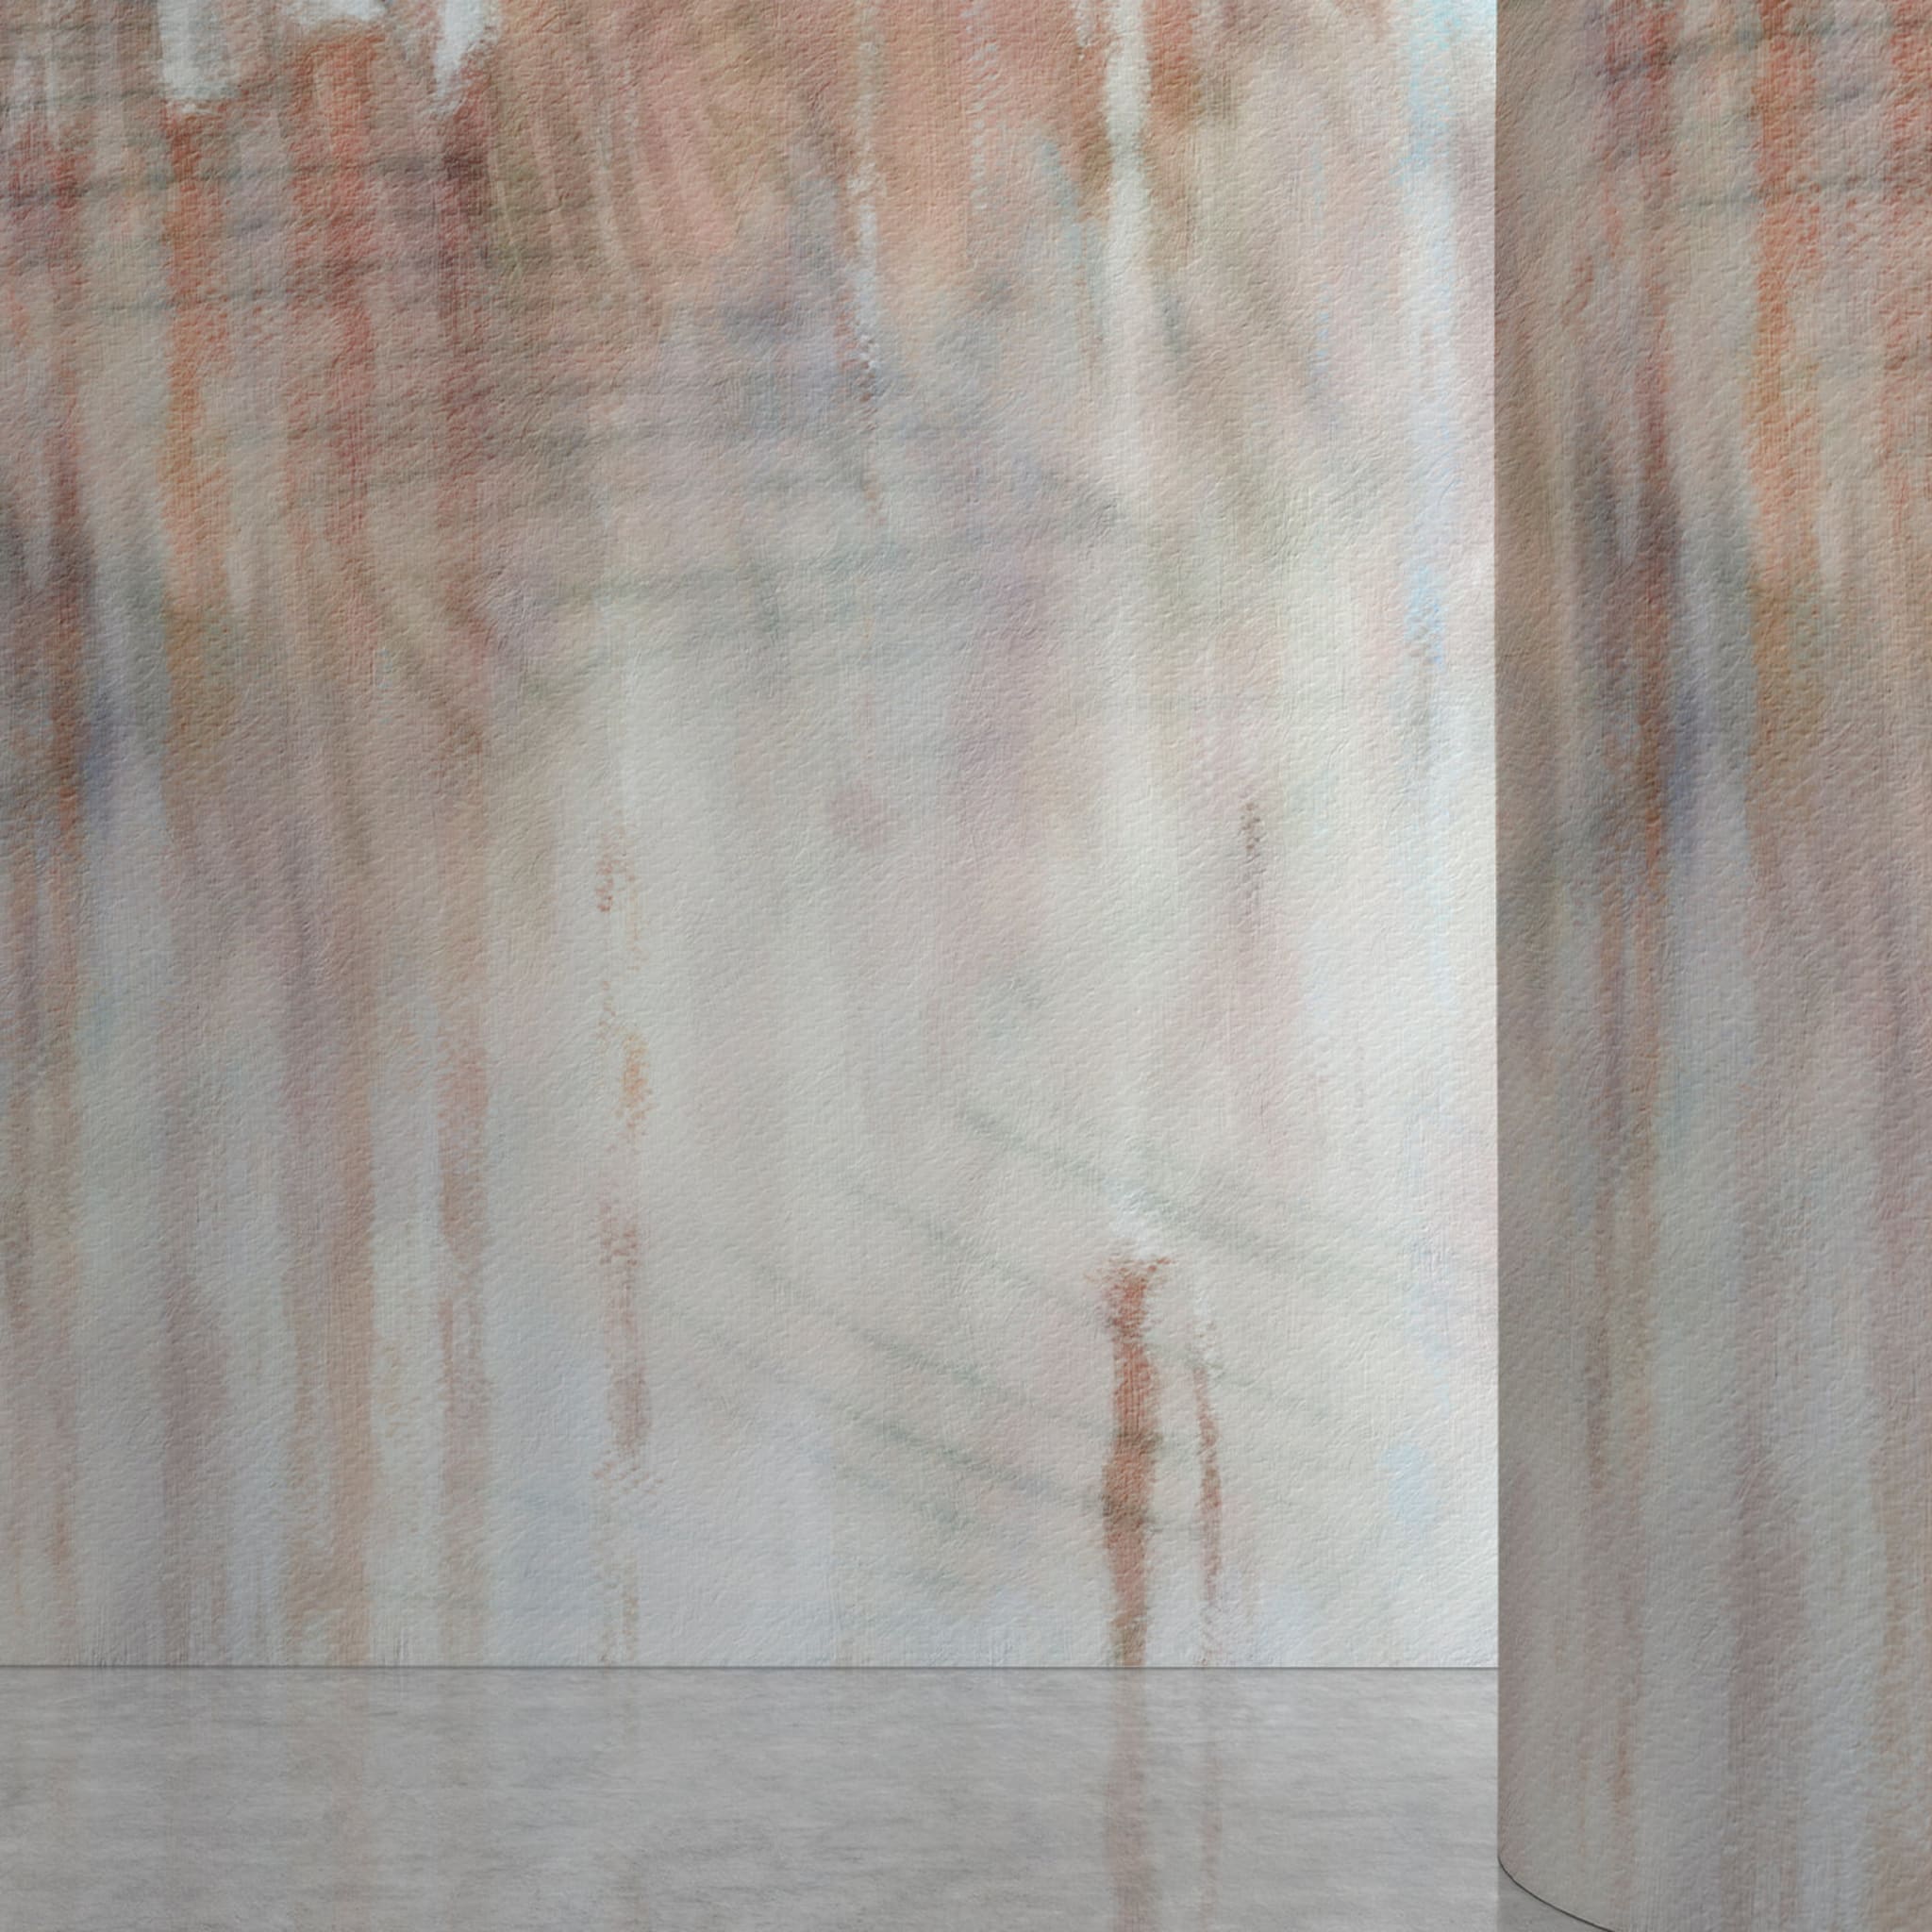 Abstract Textured Wallpaper - Alternative view 1